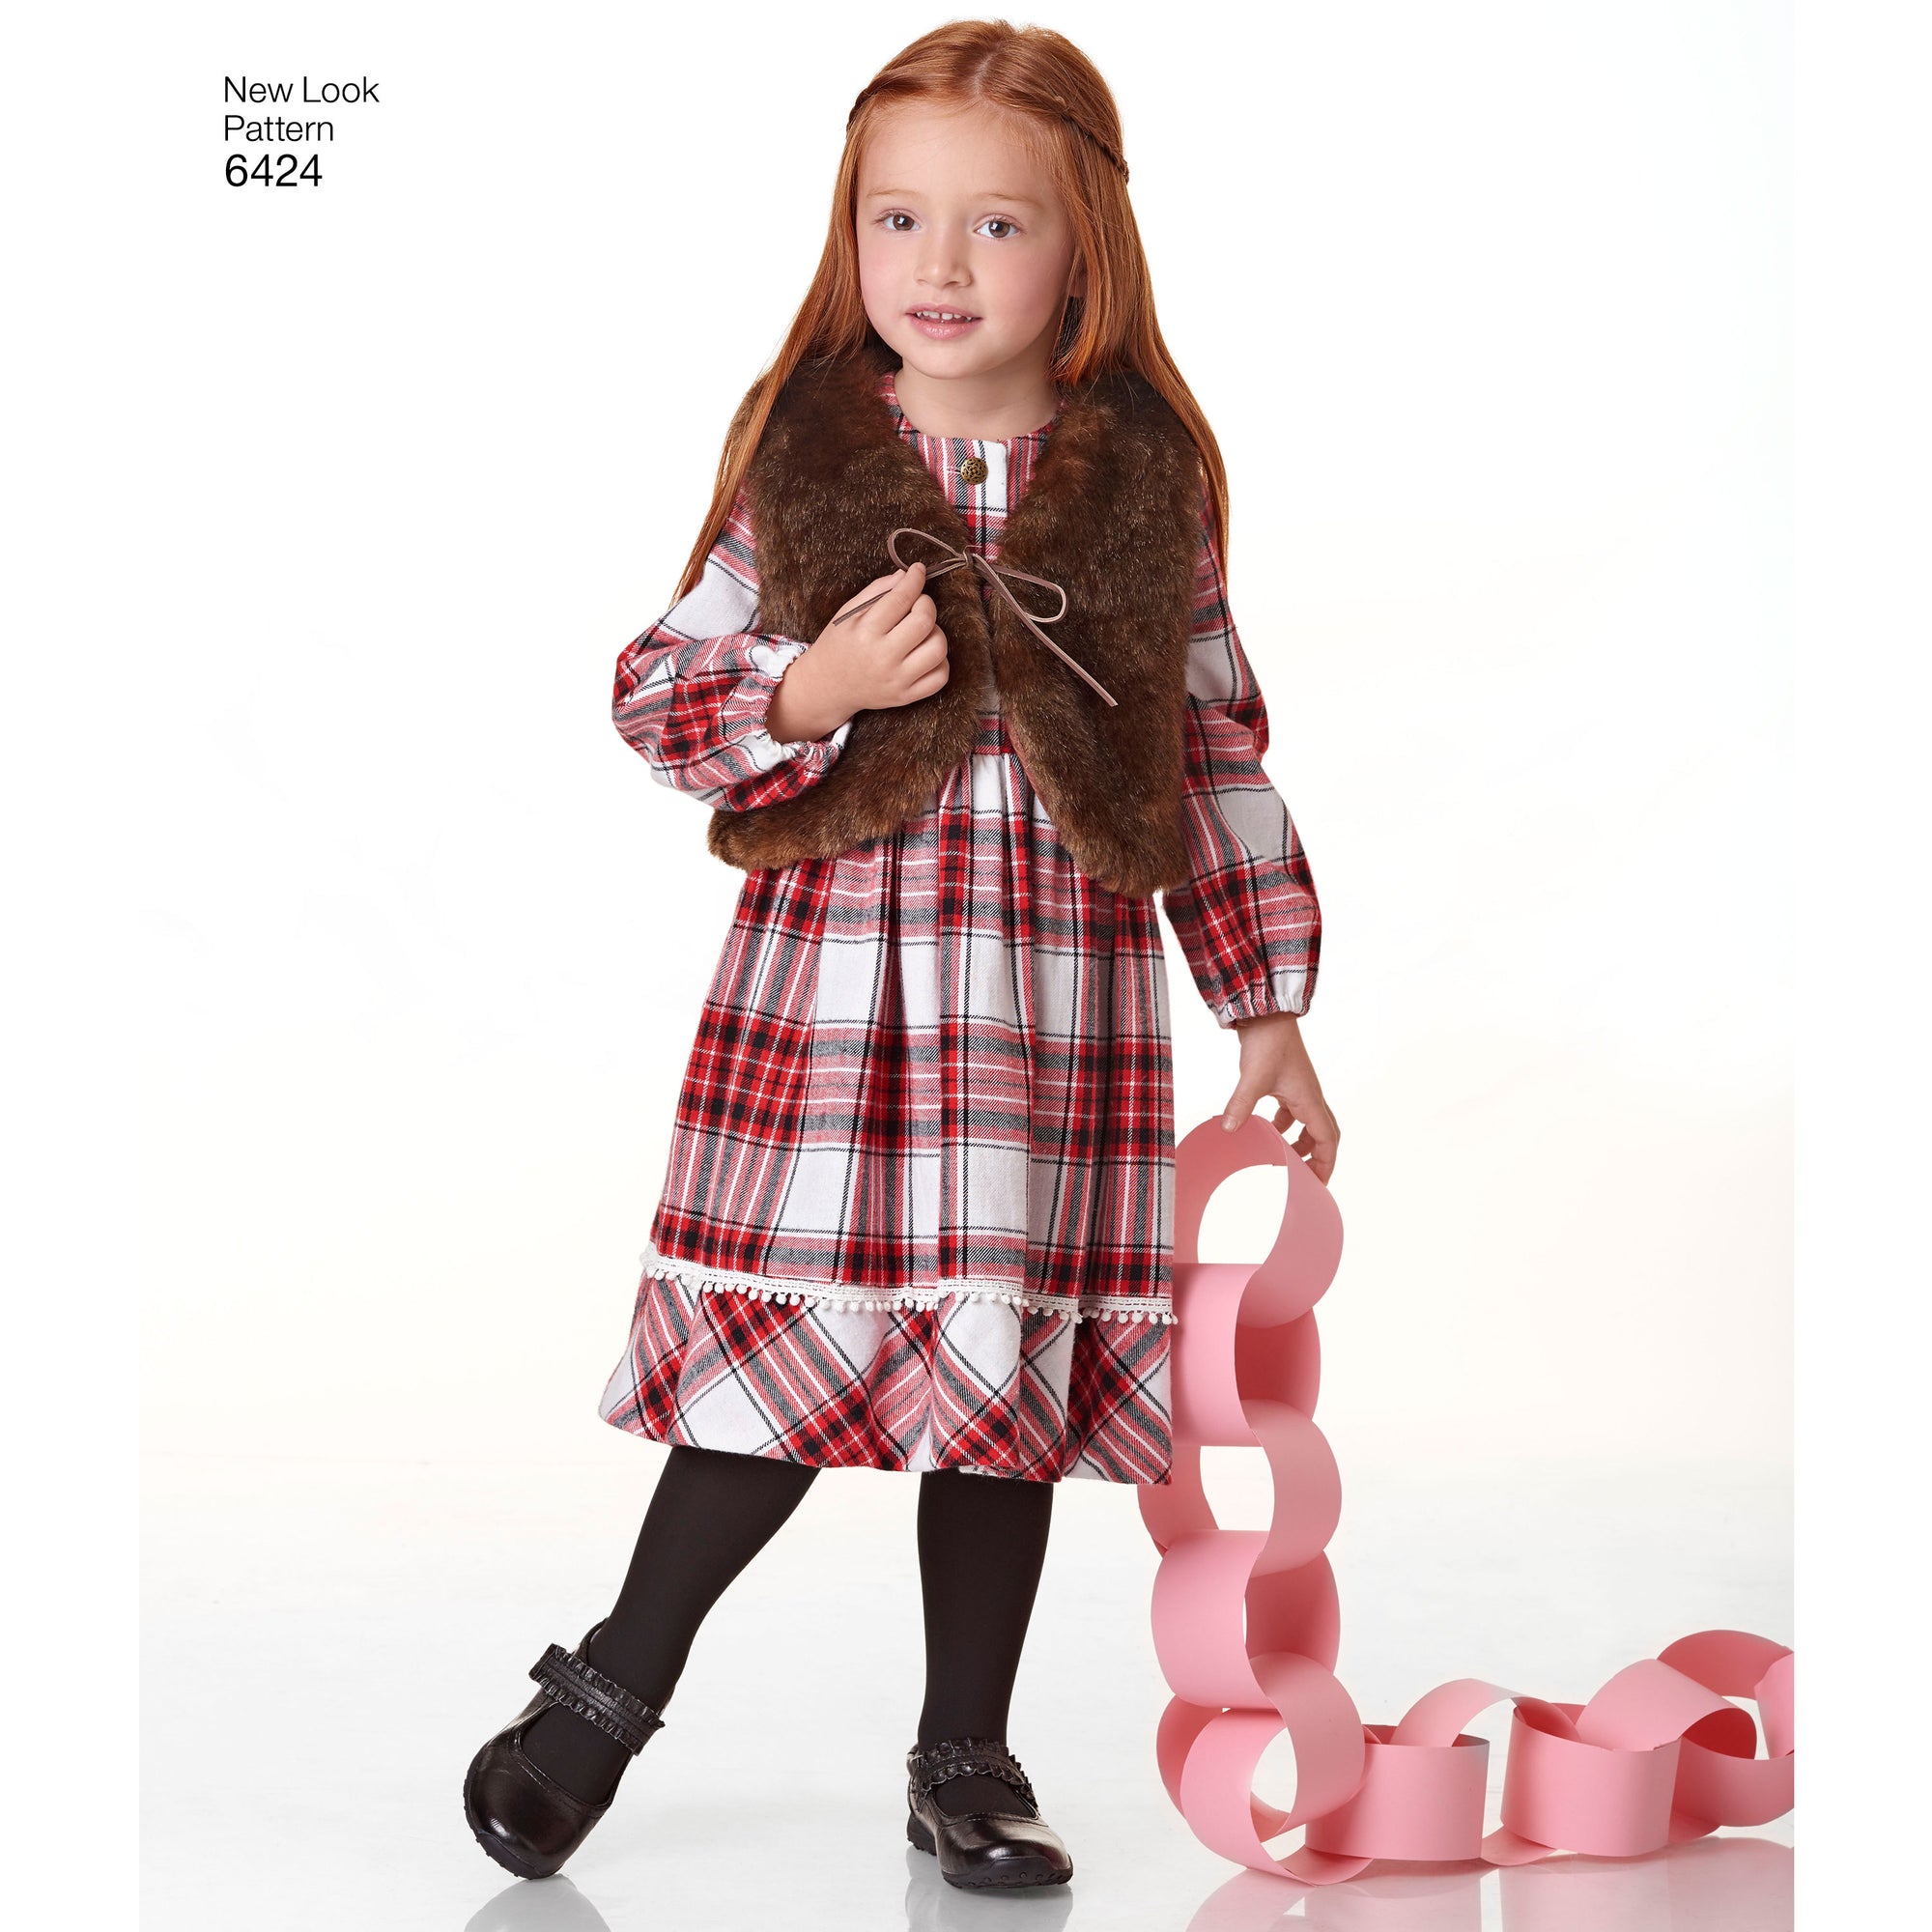 6424 Child's Dress, Top, Vest and Knit Leggings